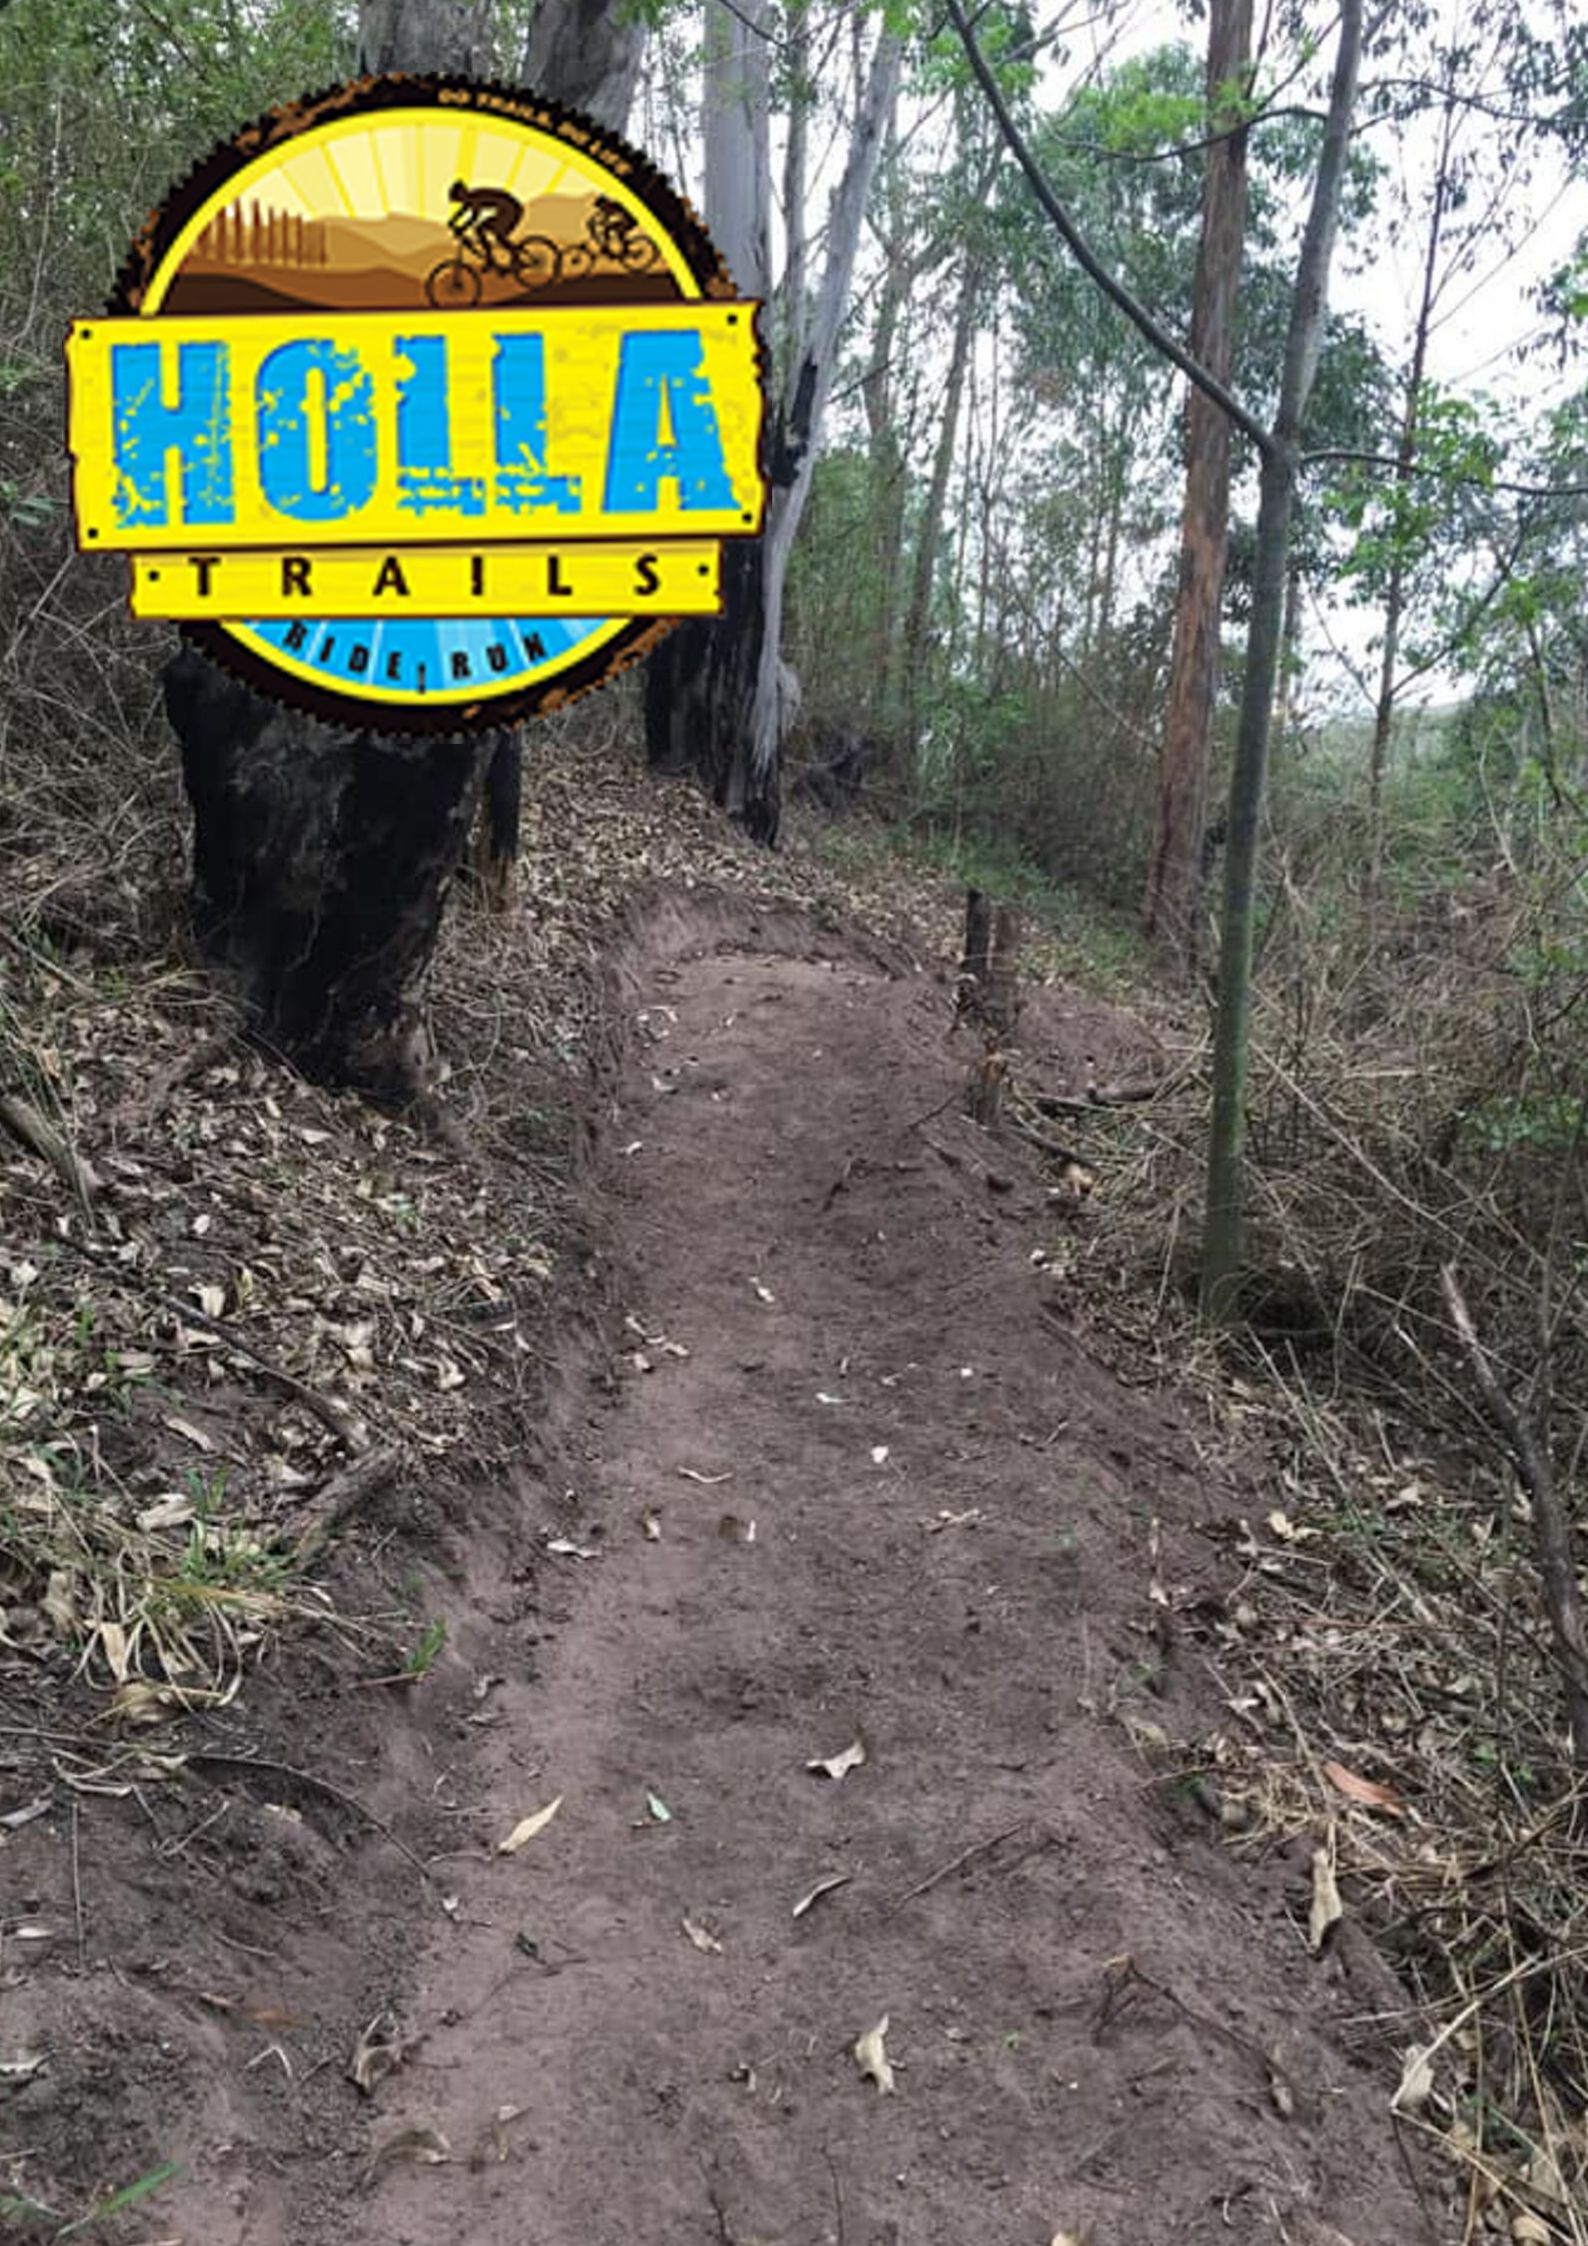 Holla Trails